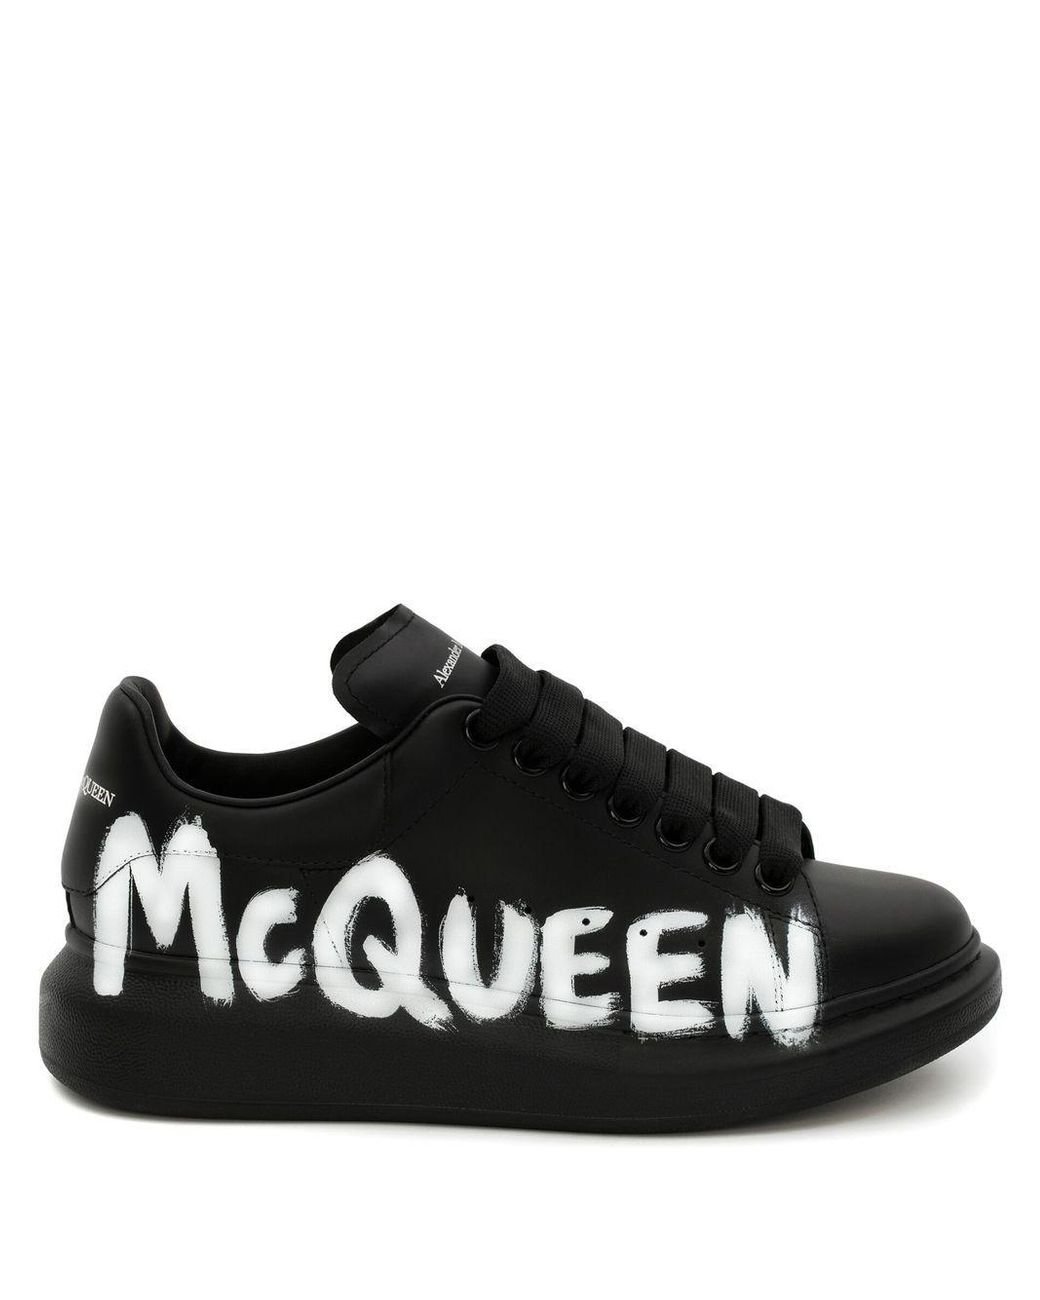 Alexander McQueen Shoes at the Best Price in Kenya